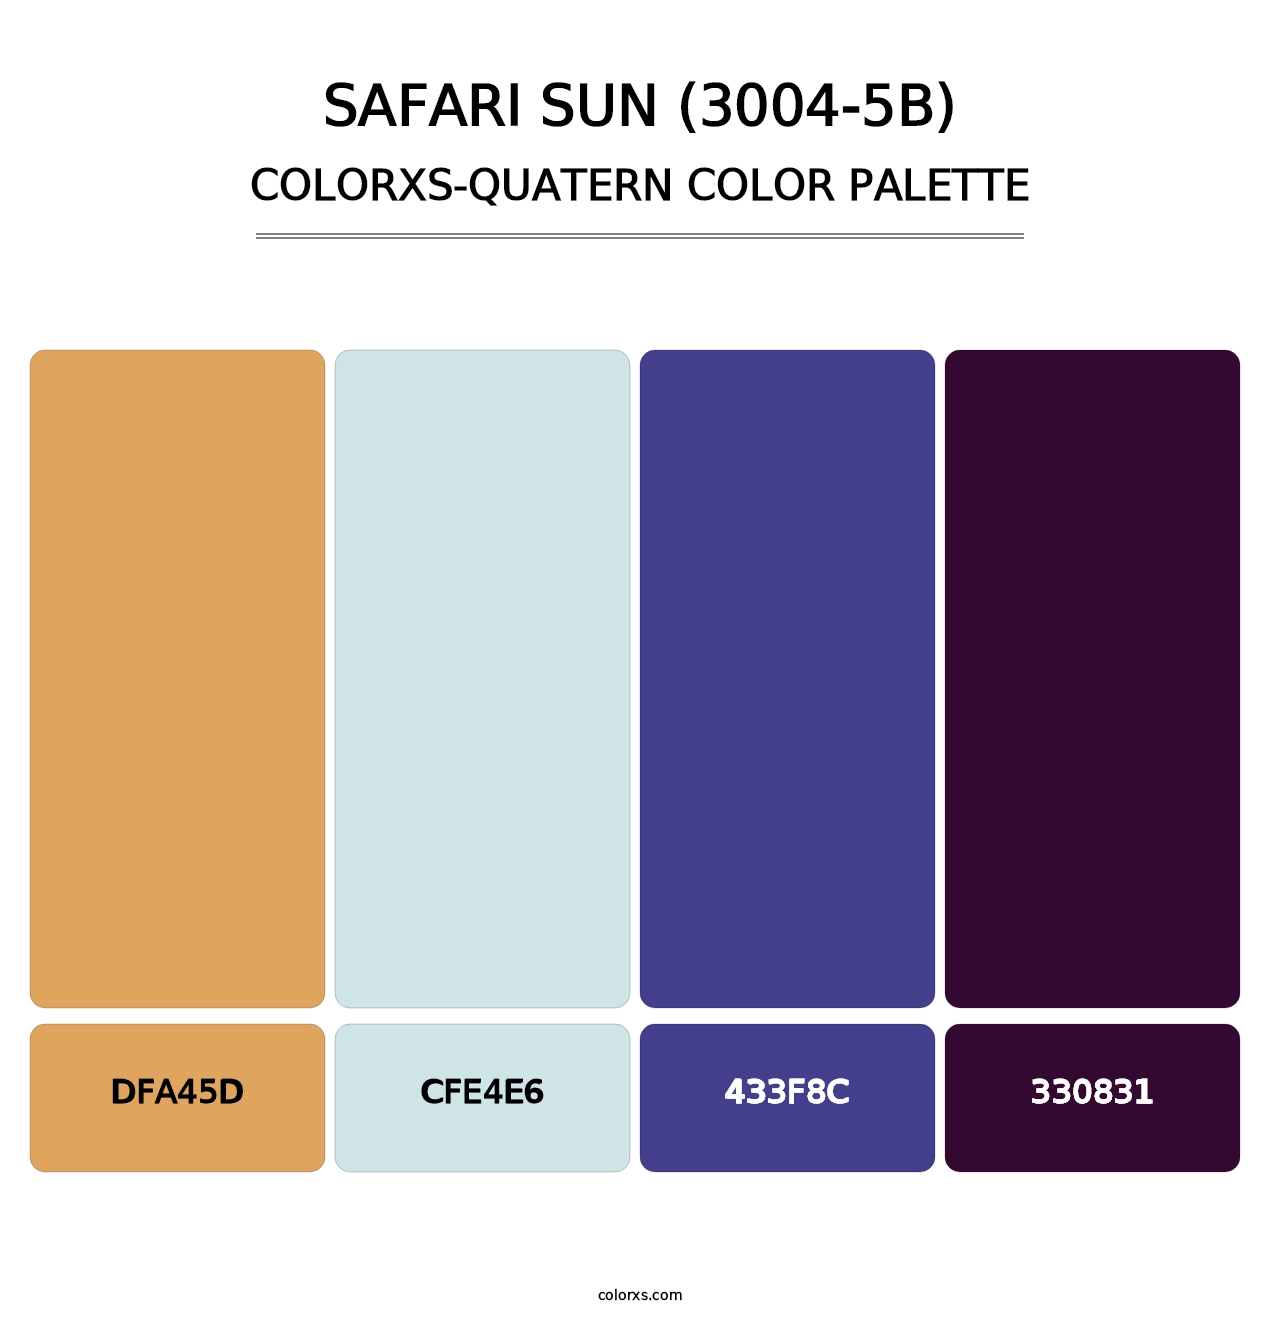 Safari Sun (3004-5B) - Colorxs Quatern Palette